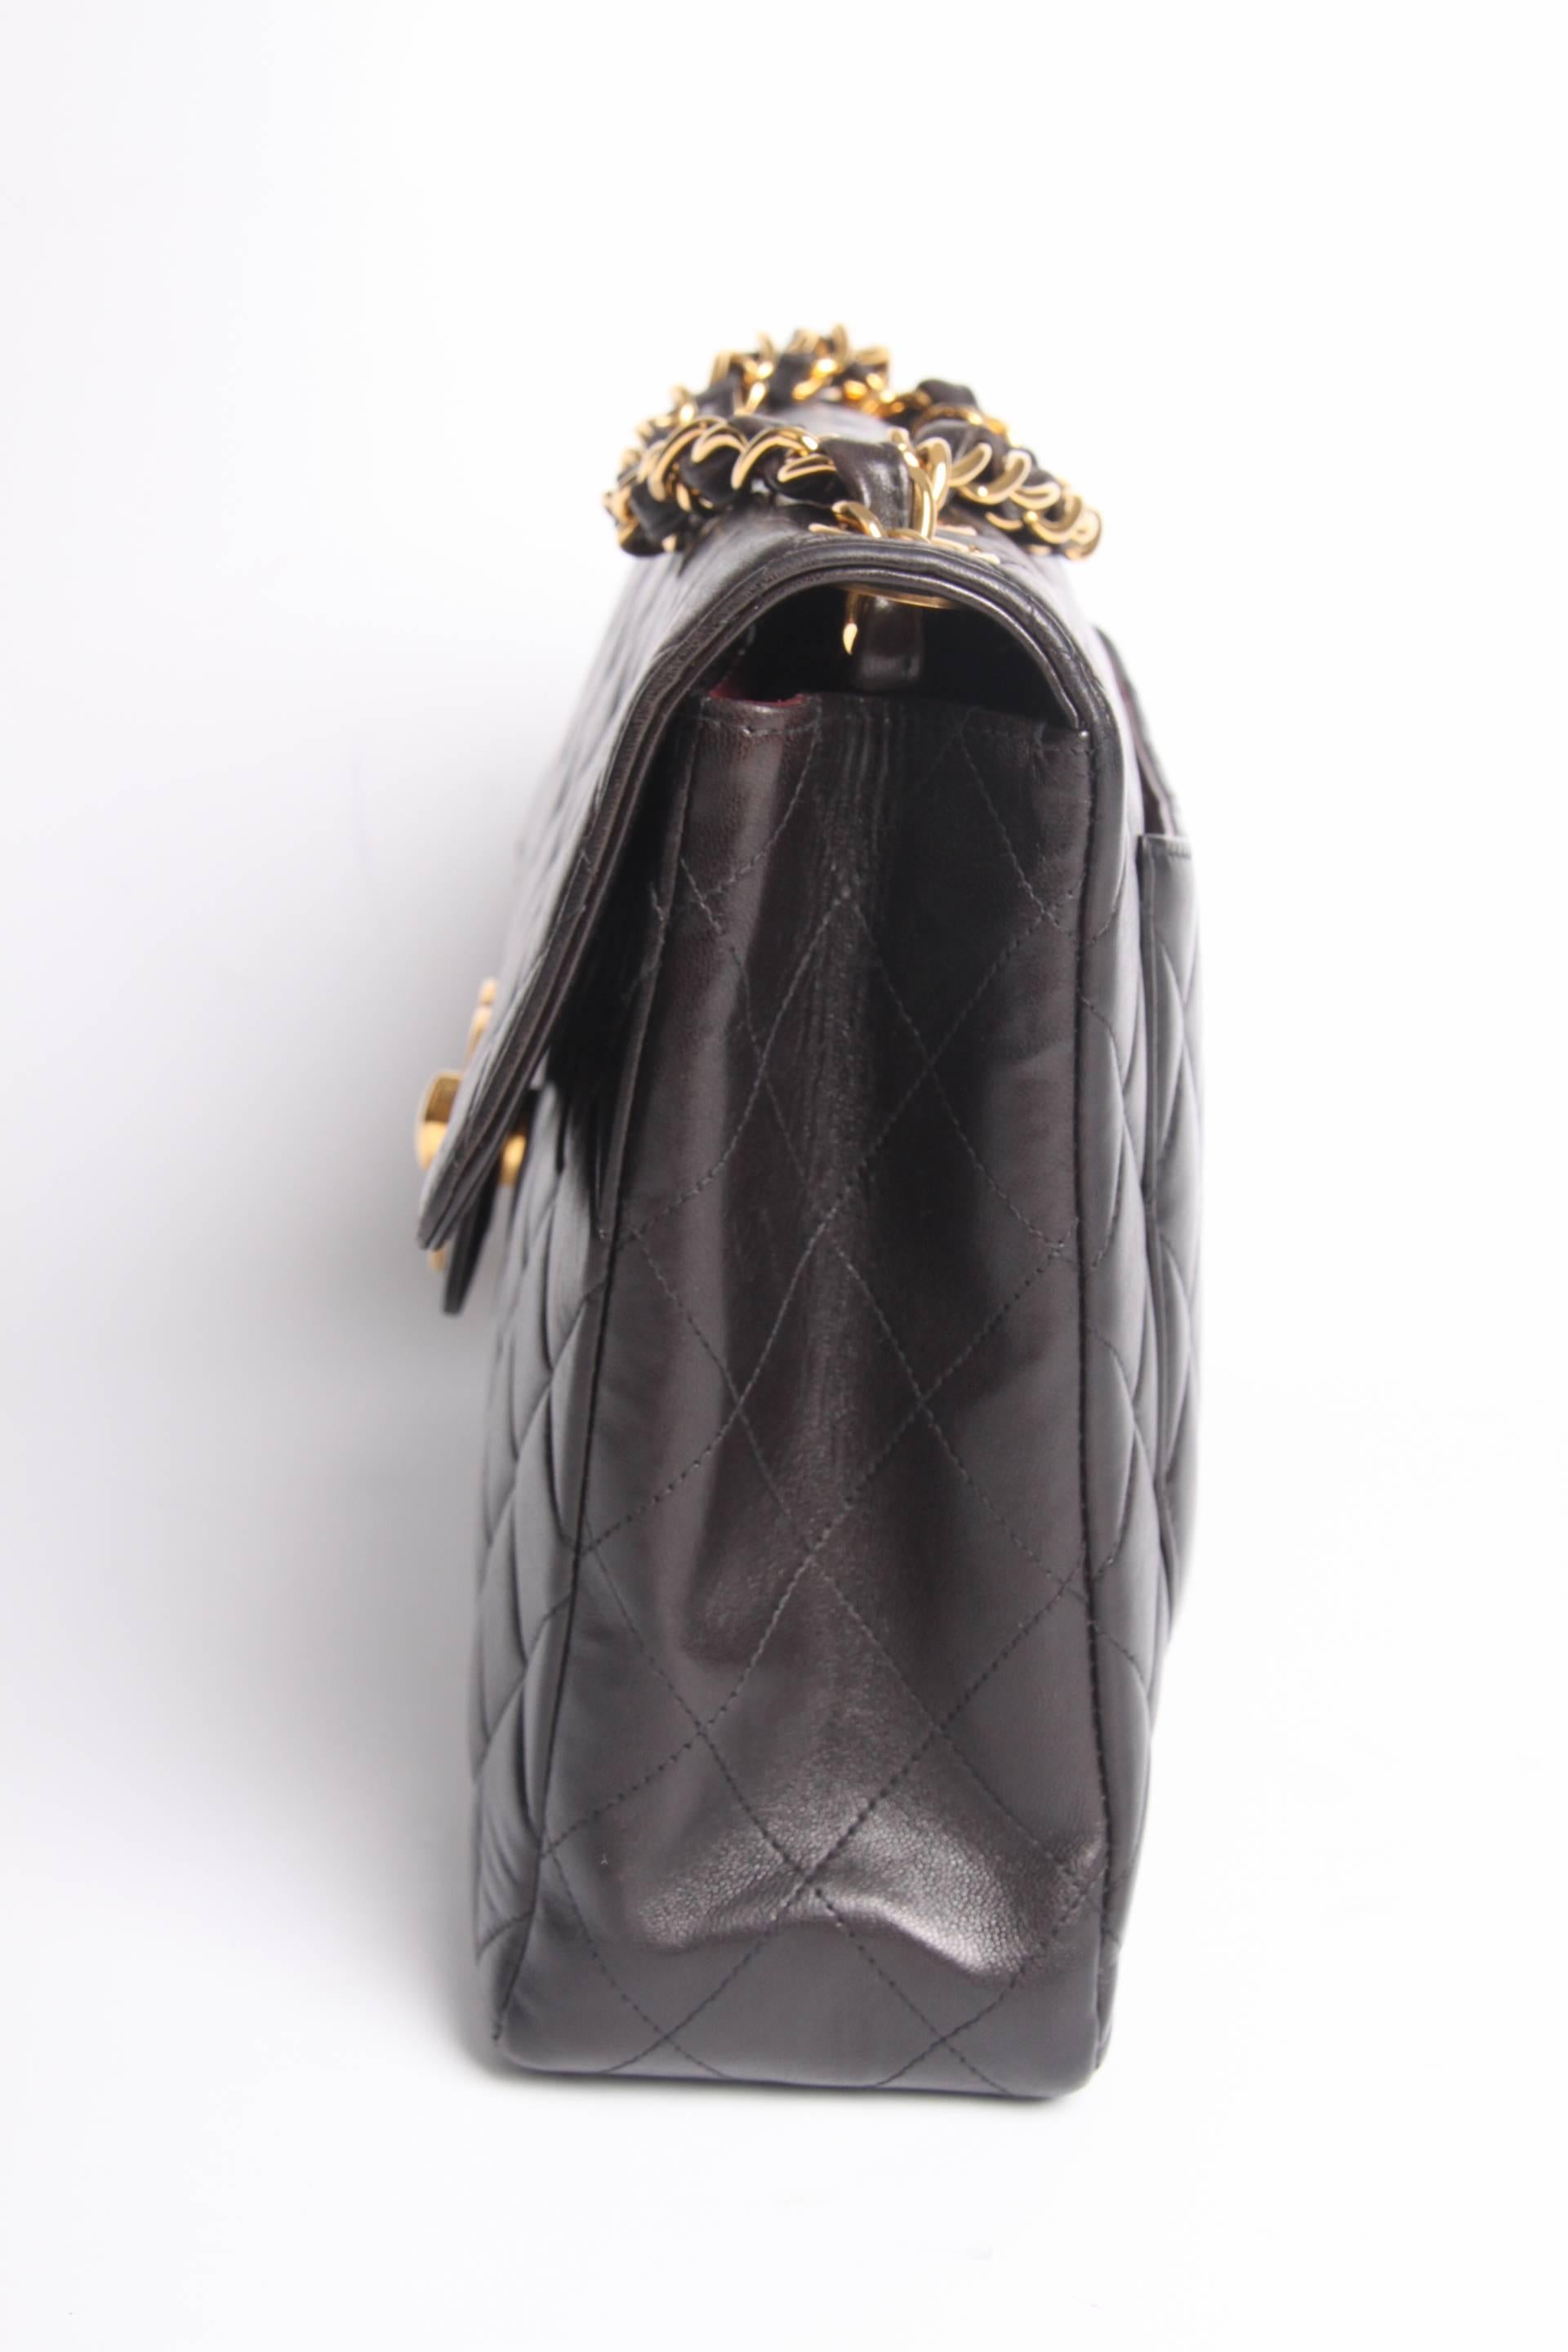  Chanel 2.55 Timeless Jumbo Flap Bag - black leather 1997 1